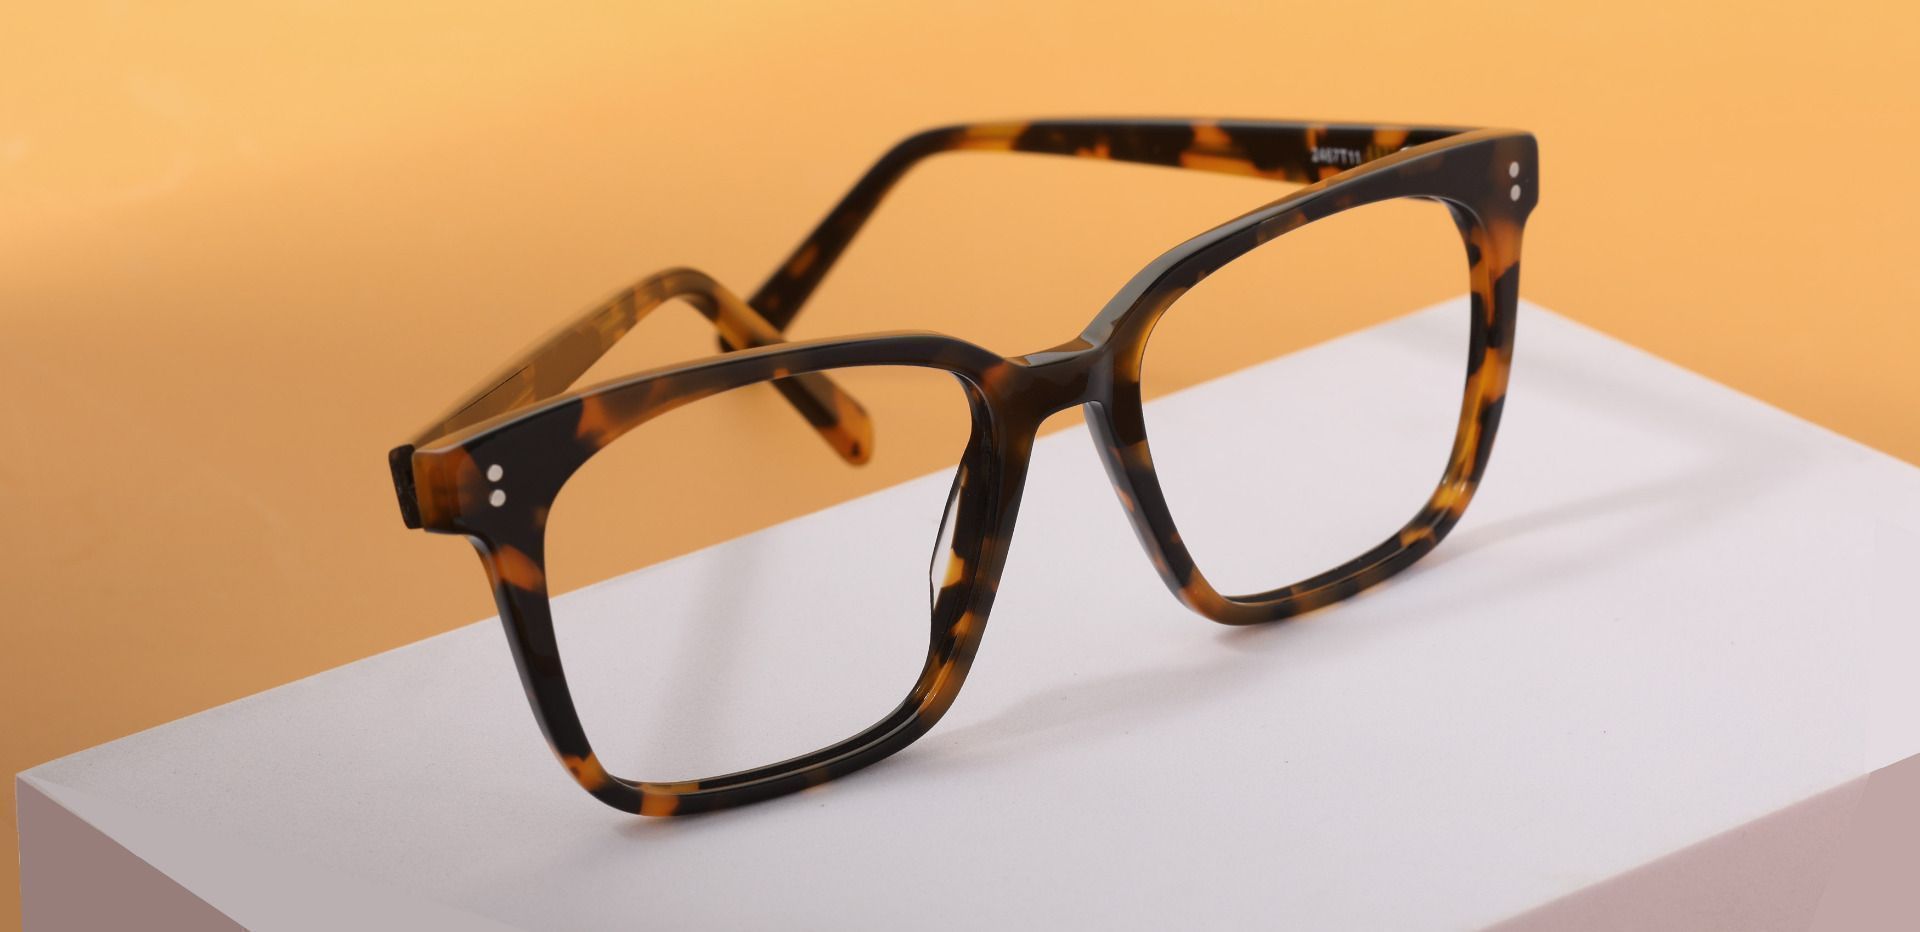 Apex Rectangle Prescription Glasses - Tortoise